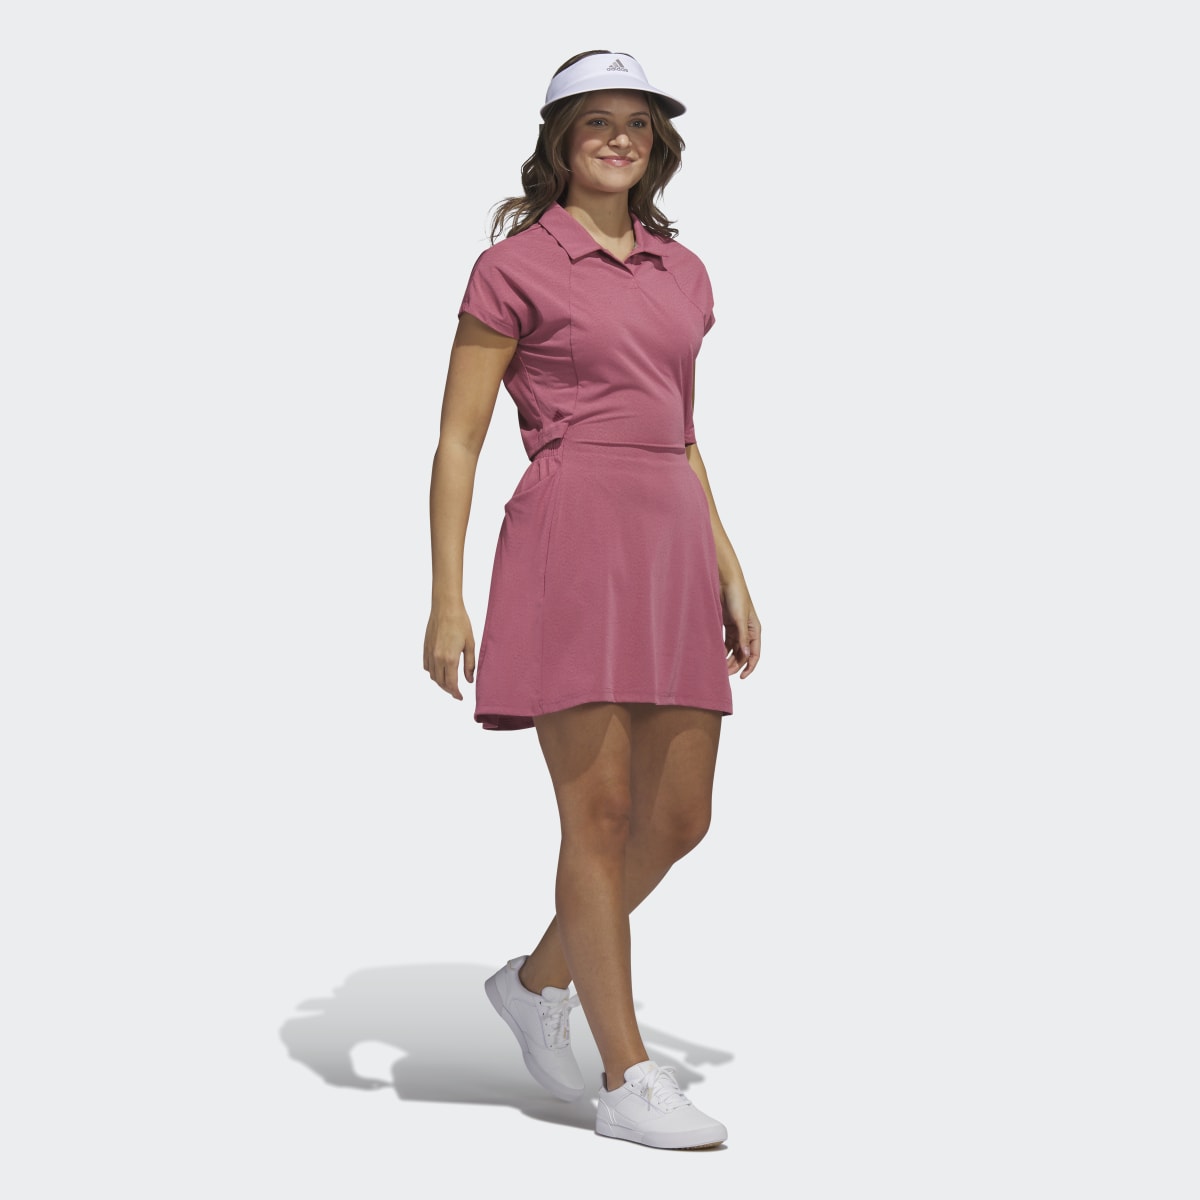 Adidas Go-To Golf Dress. 8